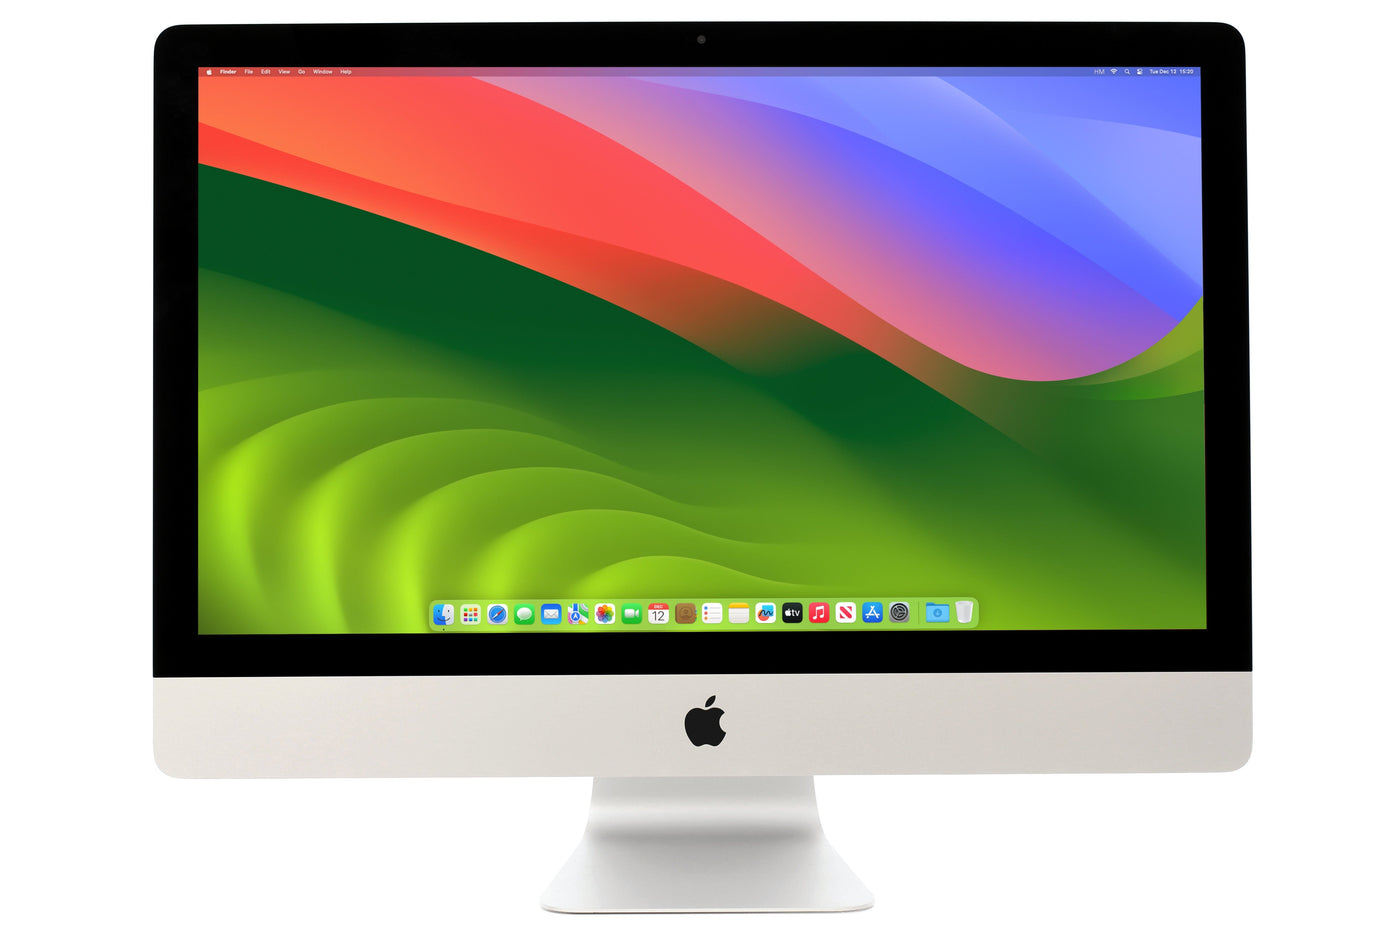 Apple iMac 27-inch iMac 5K Retina 27-inch Core i5 3.3GHz (2020) - Excellent